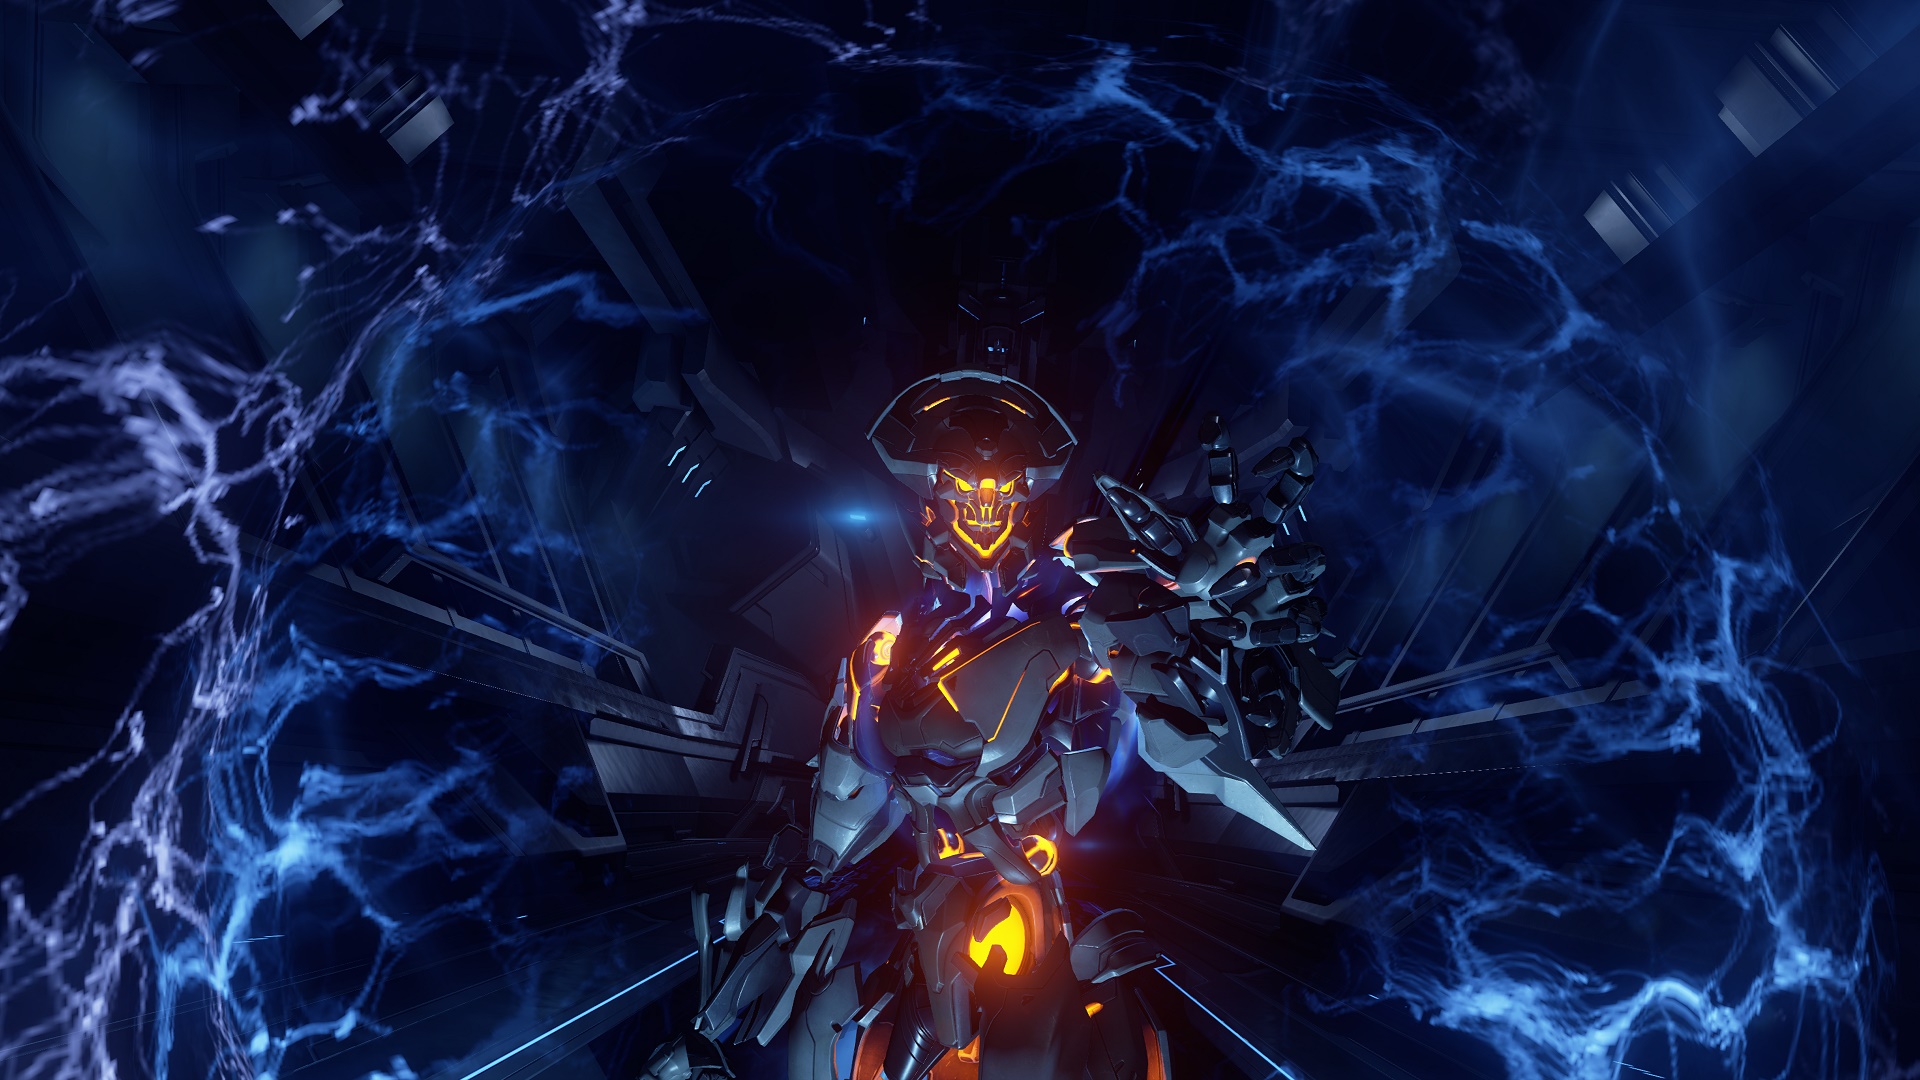 Halo 5 screenshot of the Warden Eternal